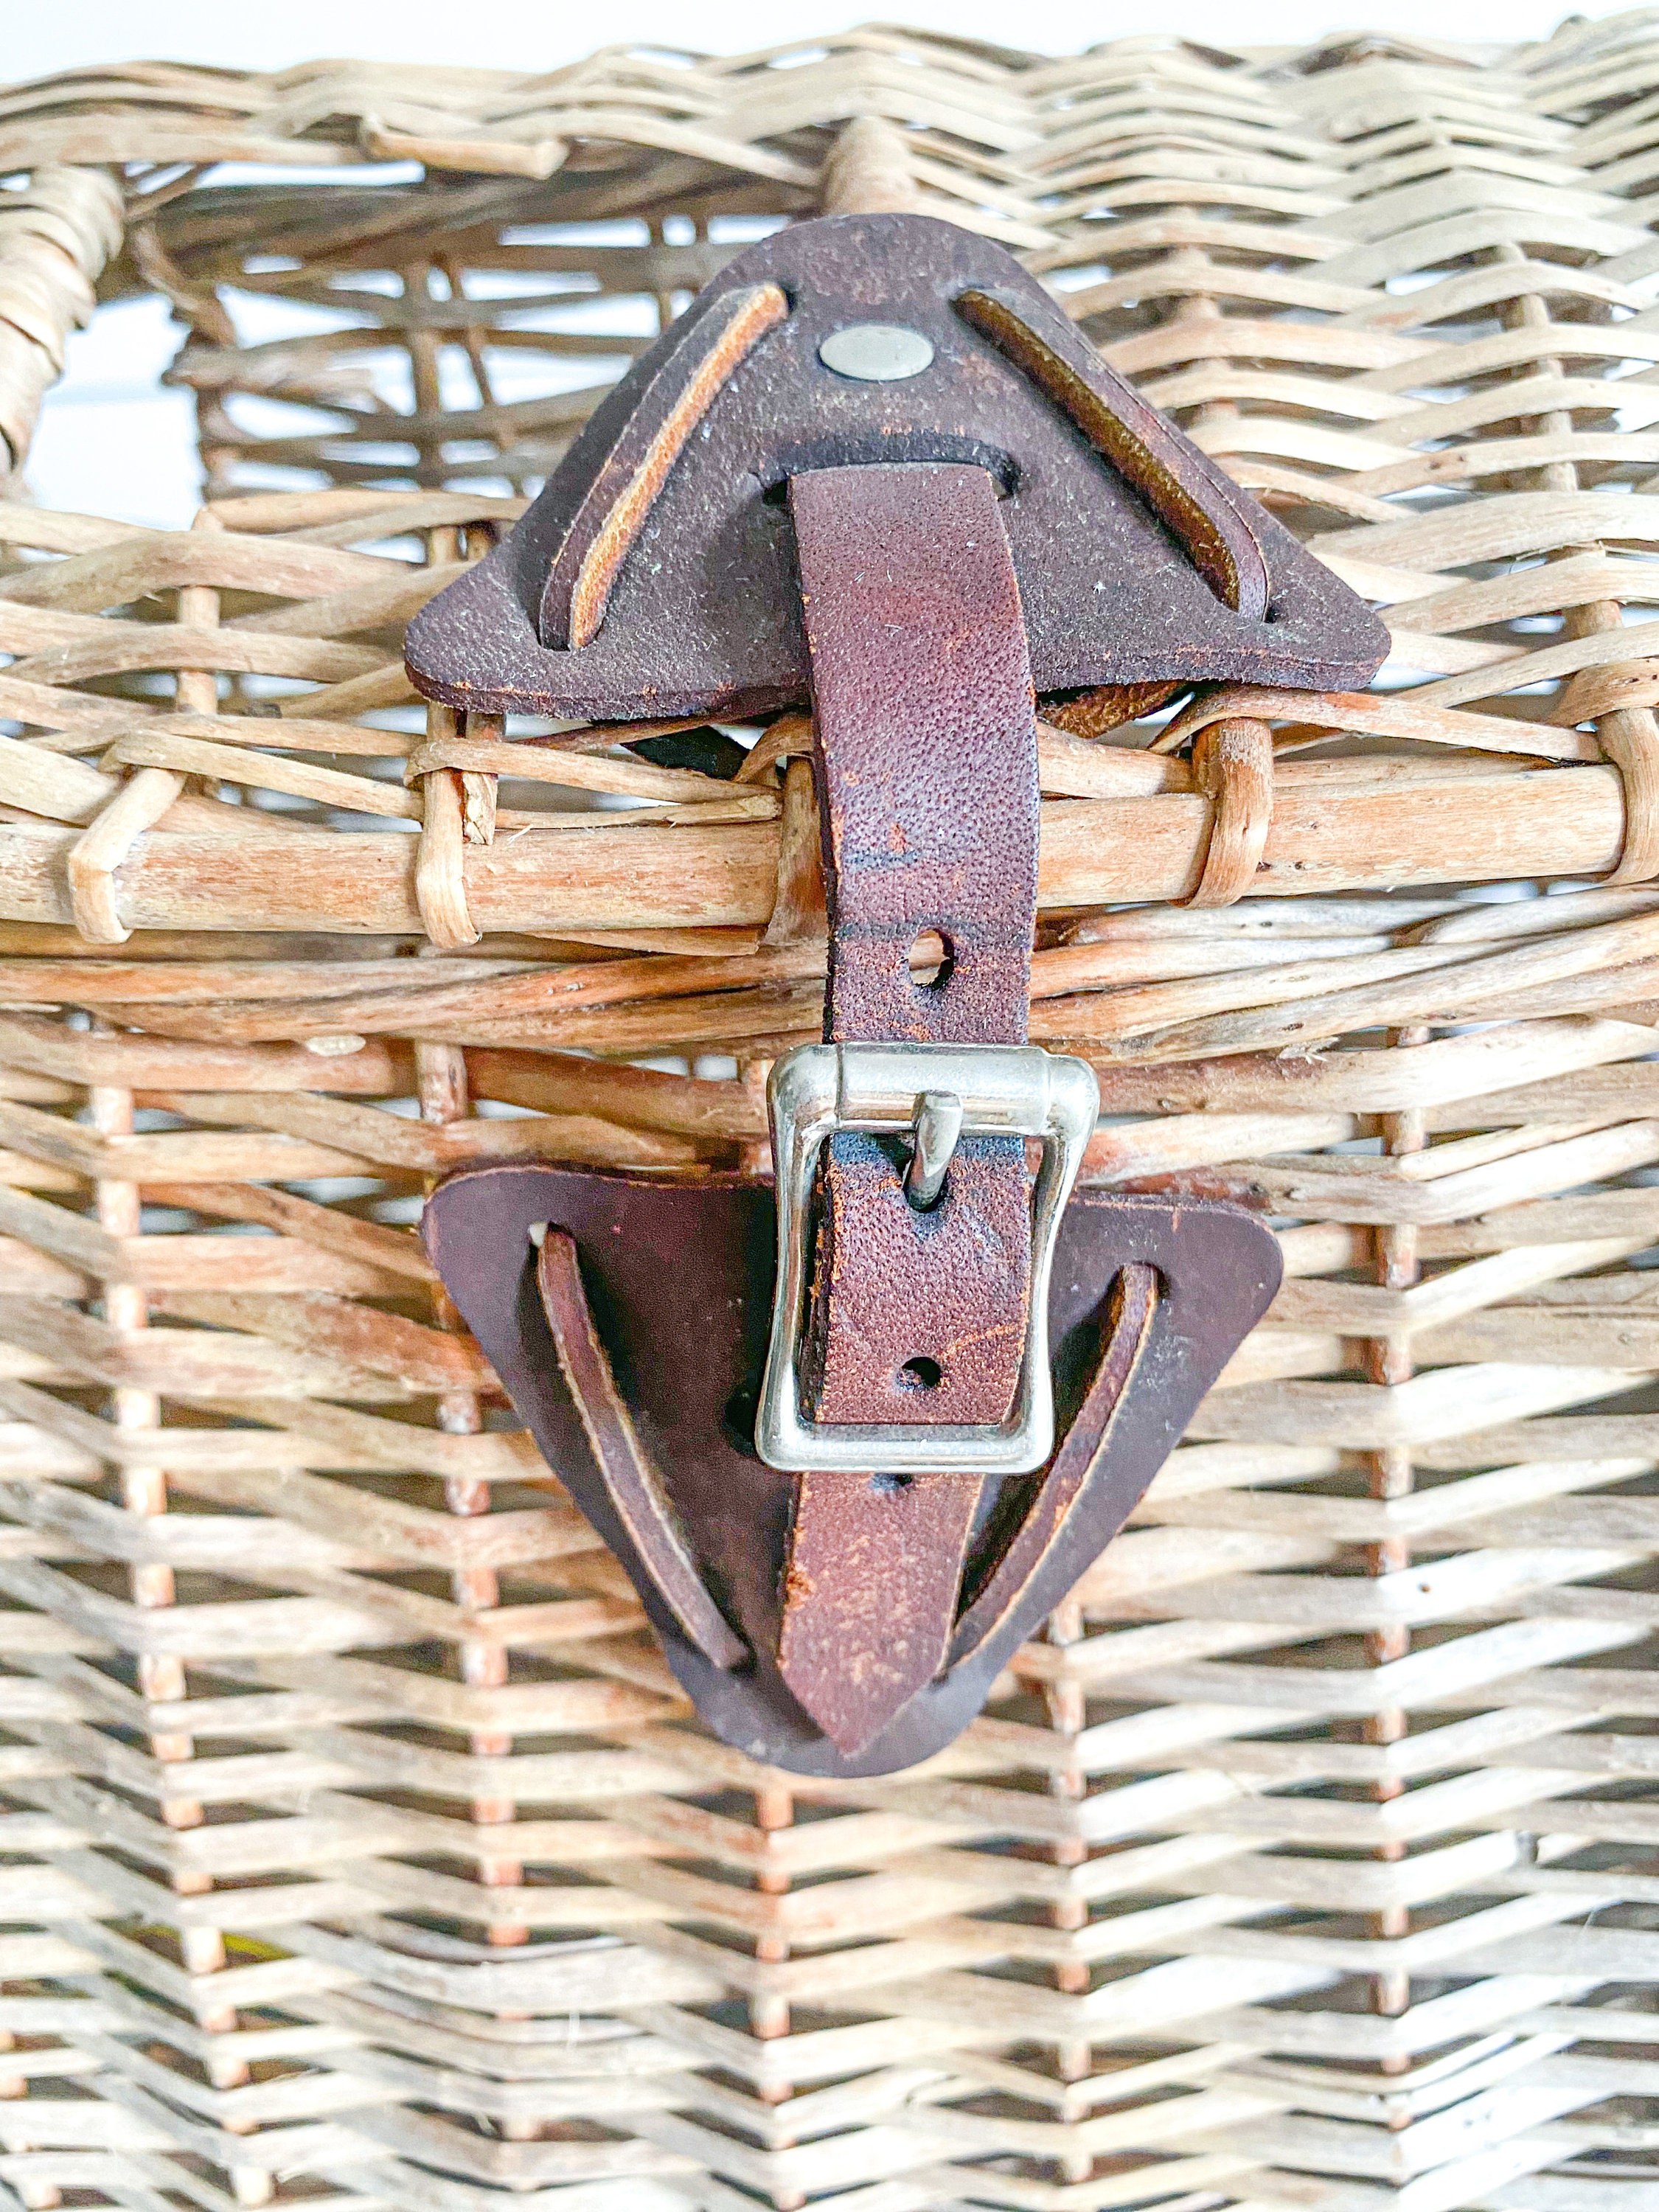 Vintage Wicker Fishing Creel Fish Basket W/ Leather Clasp Vintage